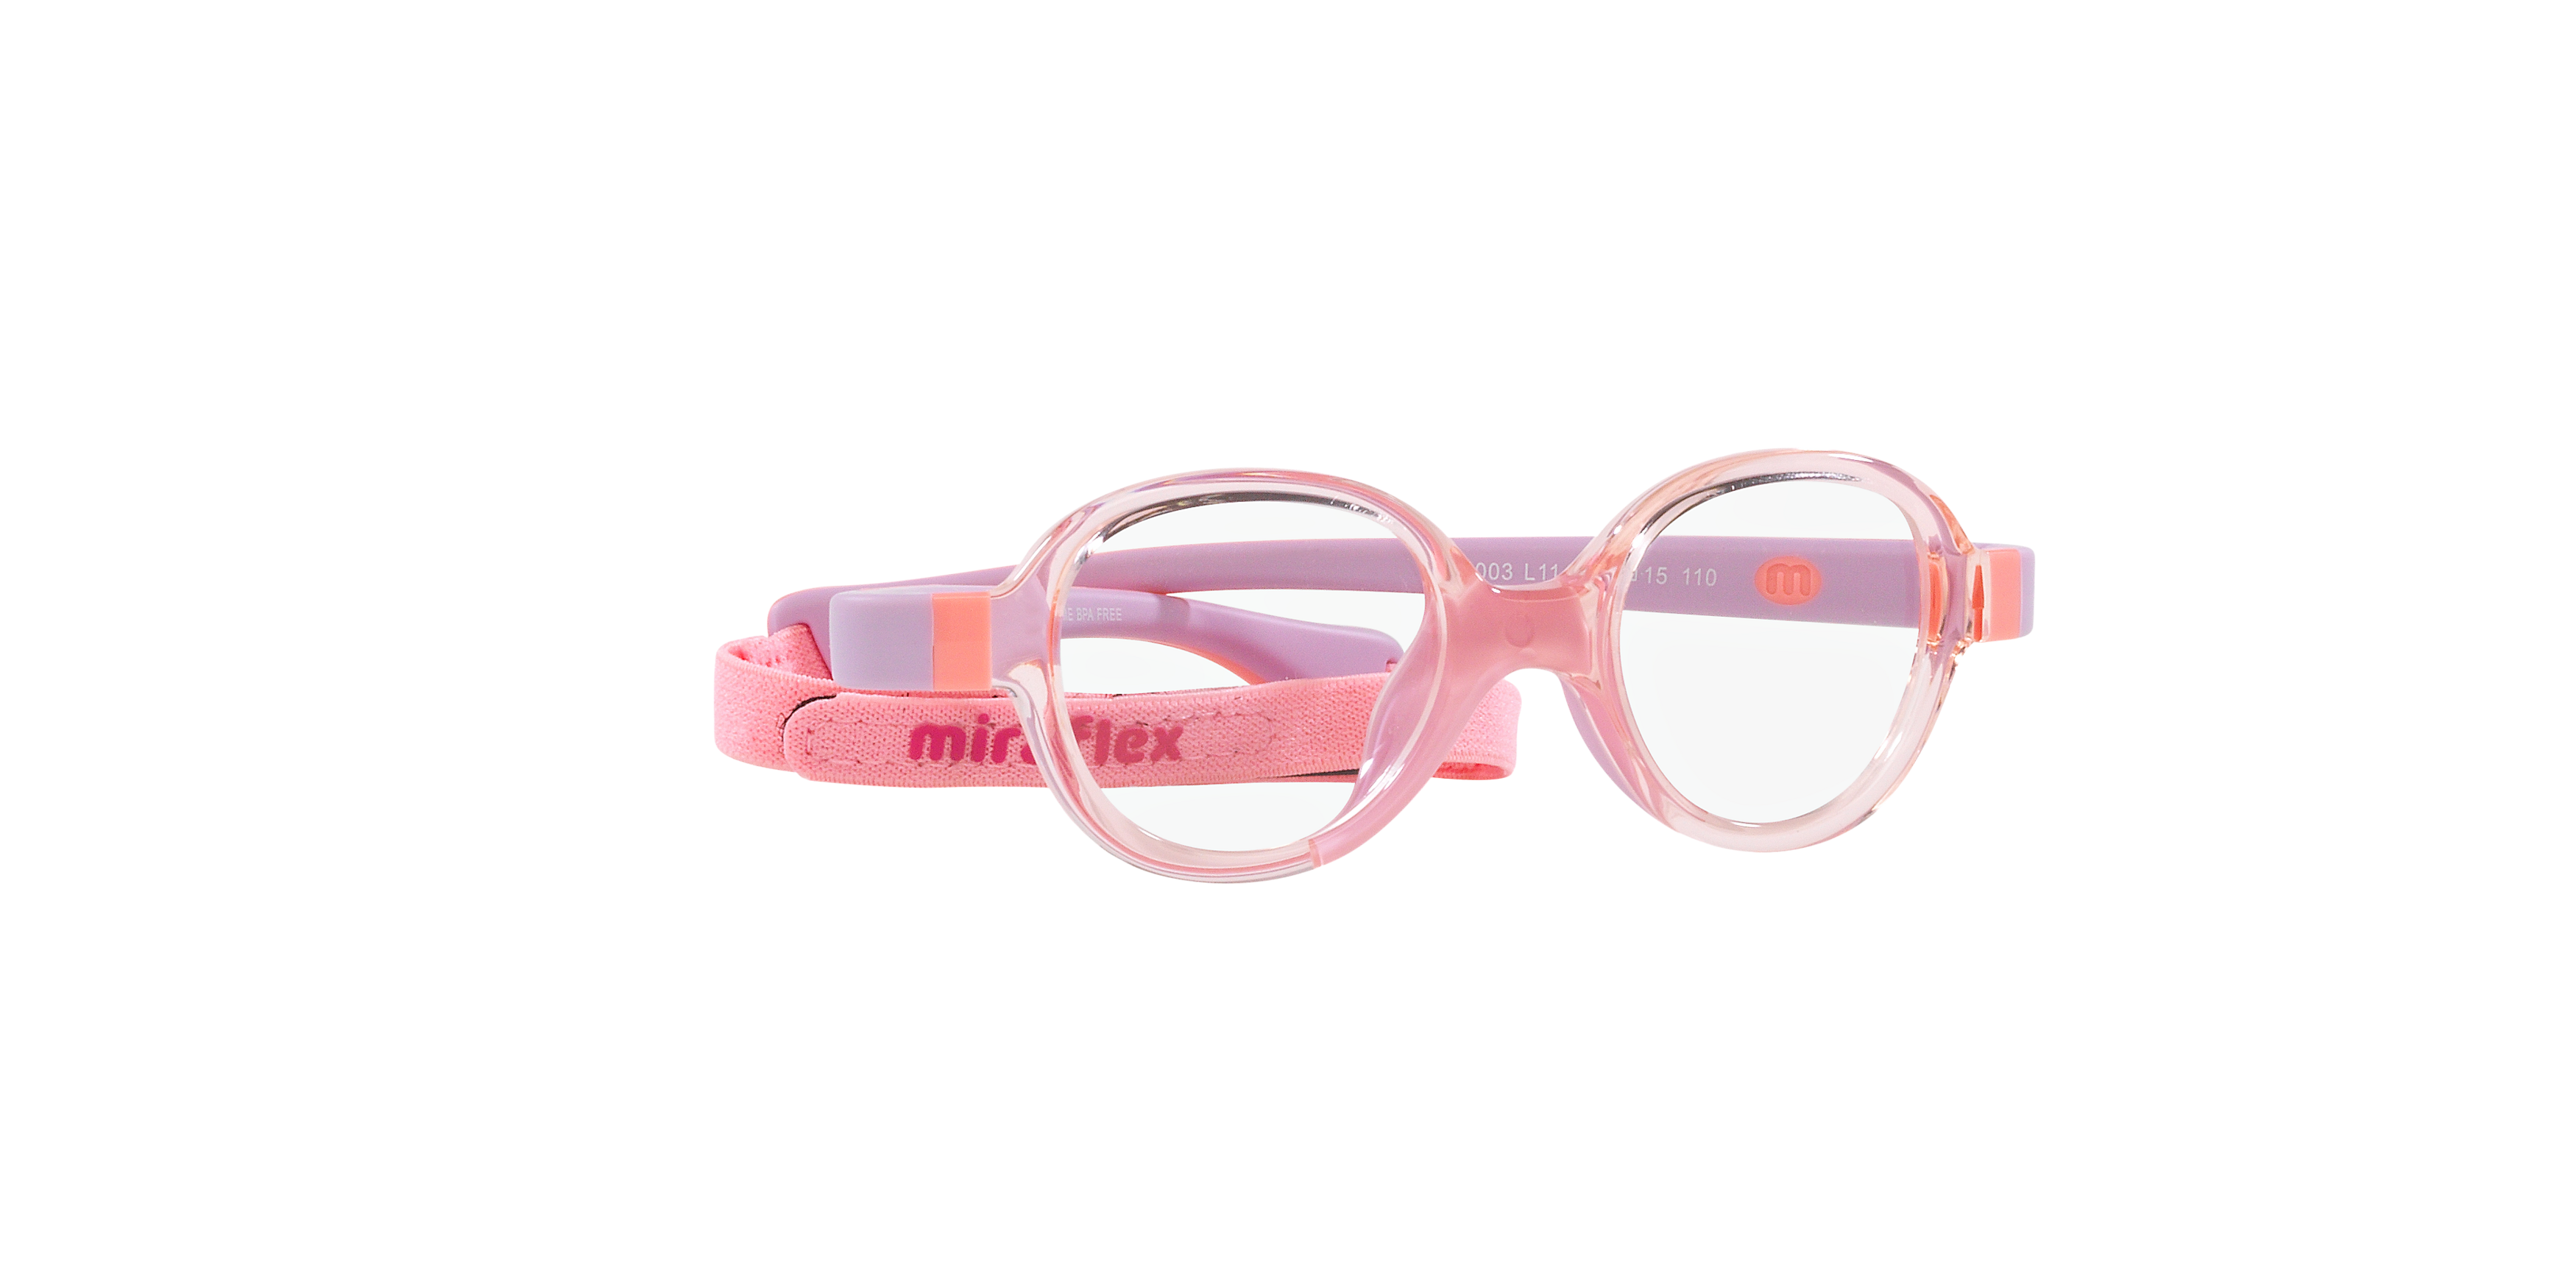 Angle_Right01 Miraflex MF 4003 Children's Glasses Transparent / Transparent, Pink